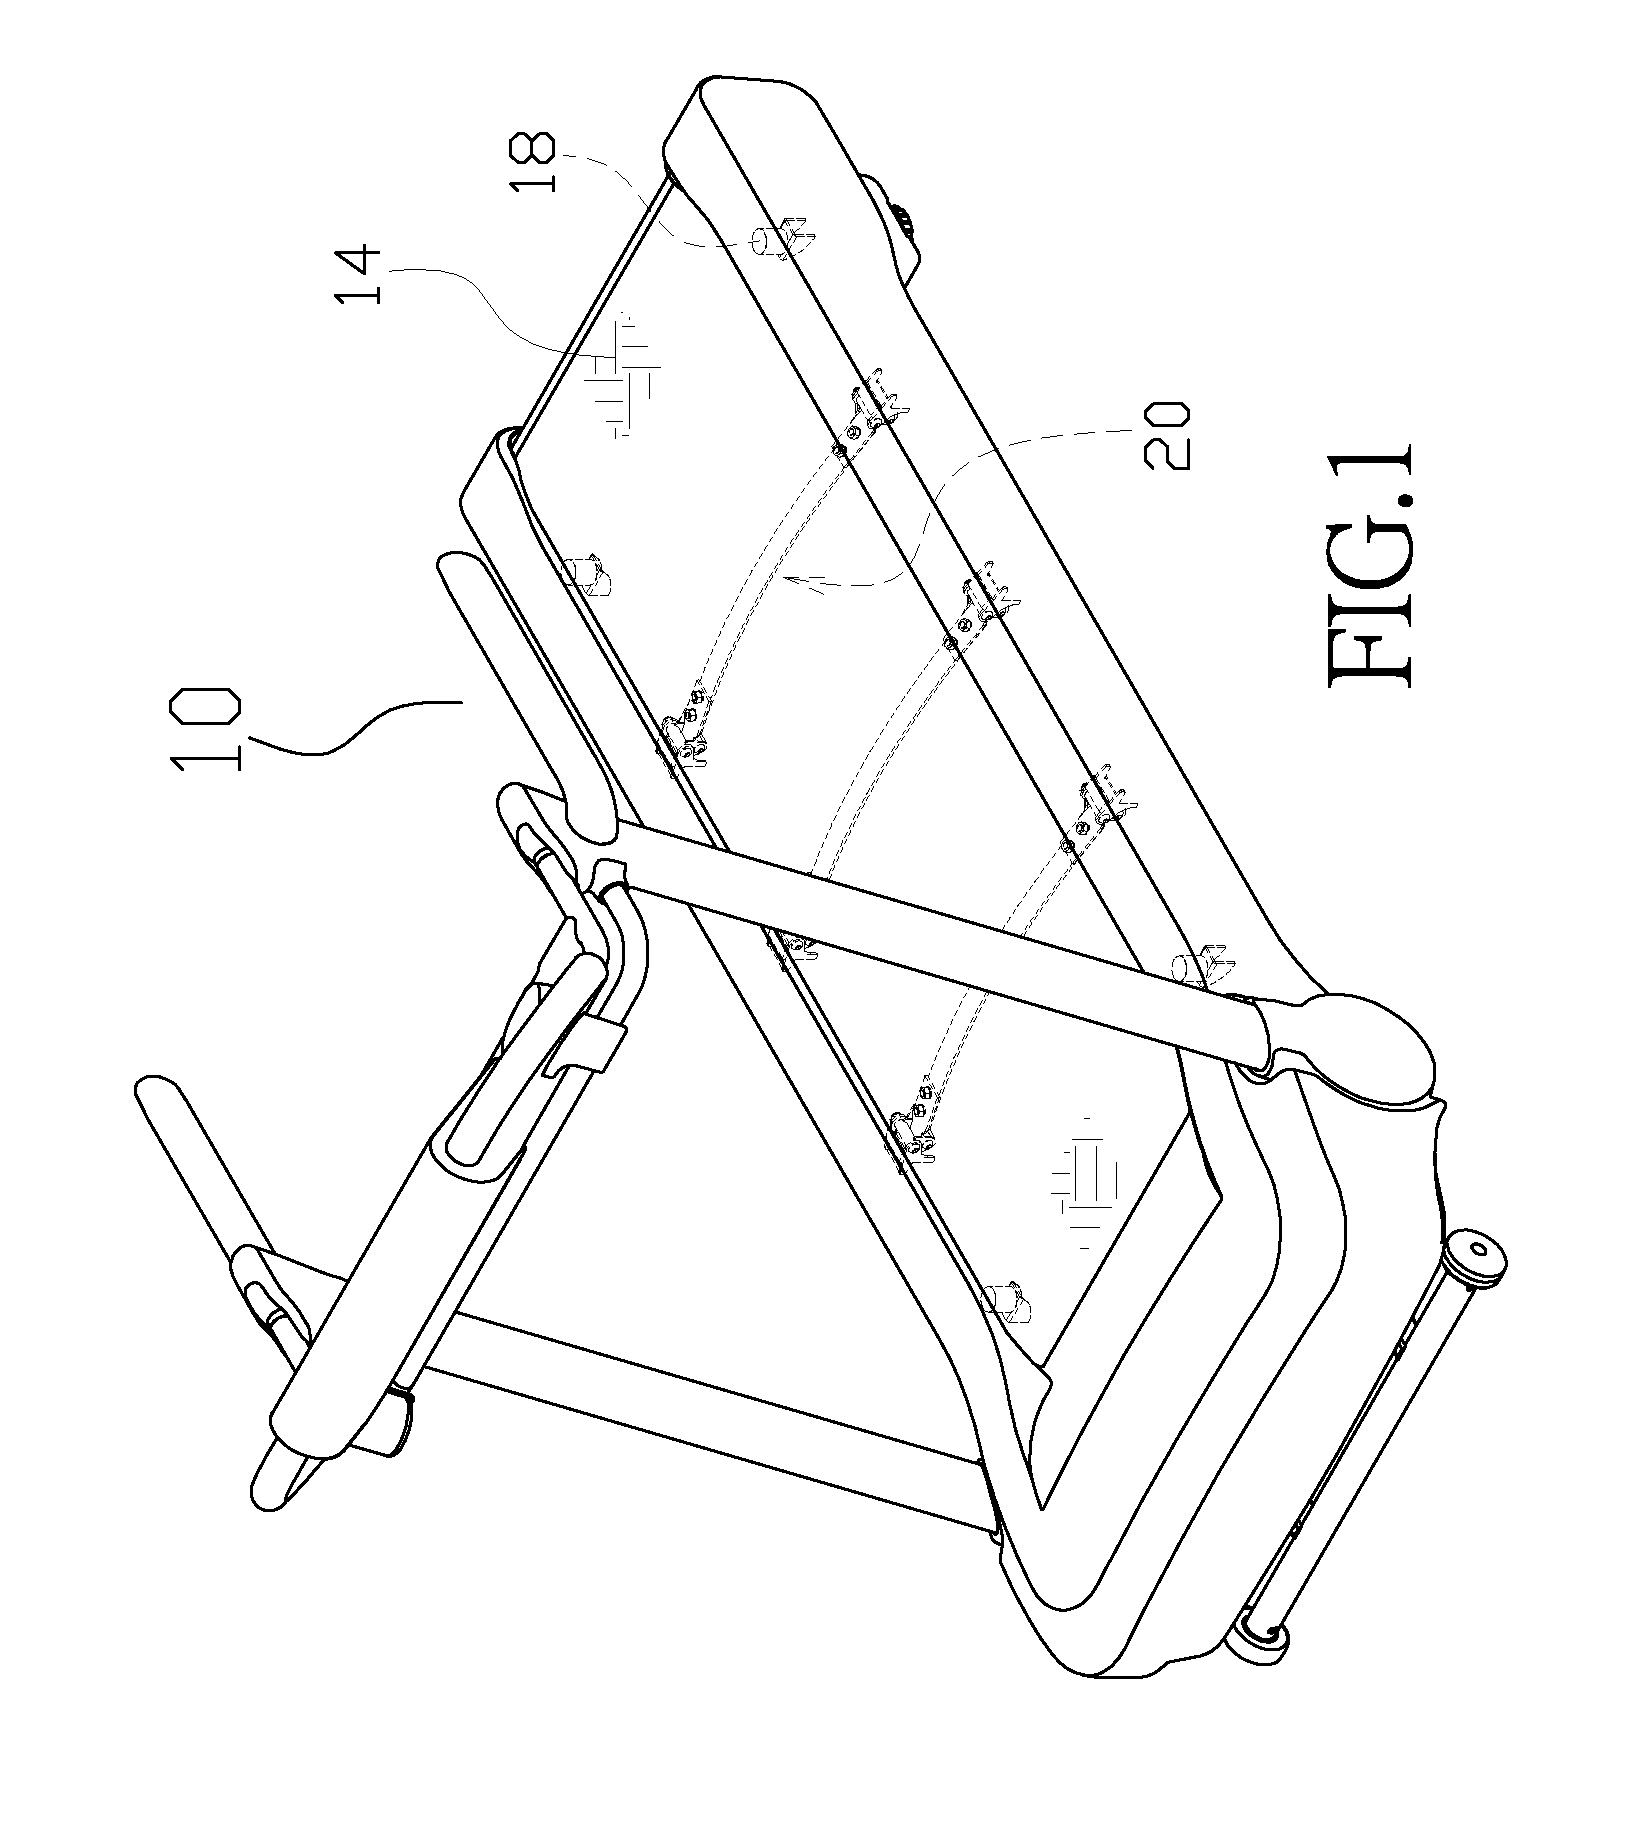 Cushioning mechanism for a treadmill